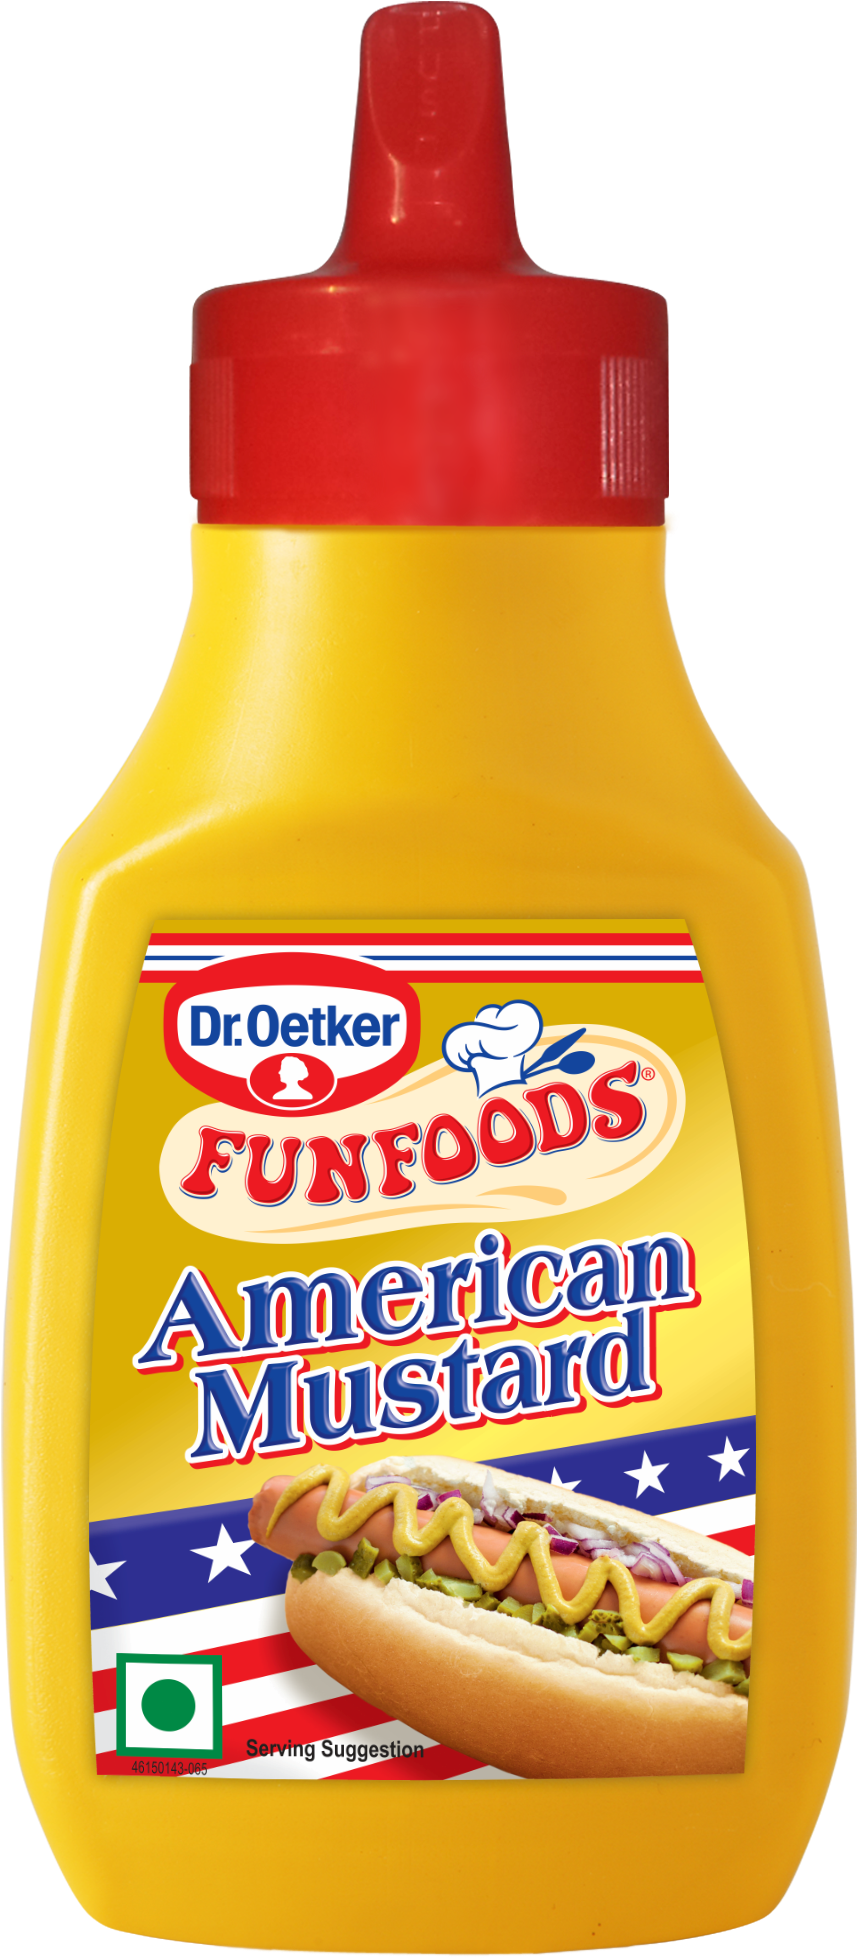 Mustard Bottle Png - Fun Foods Mustard Sauce 290gms (878x1972)